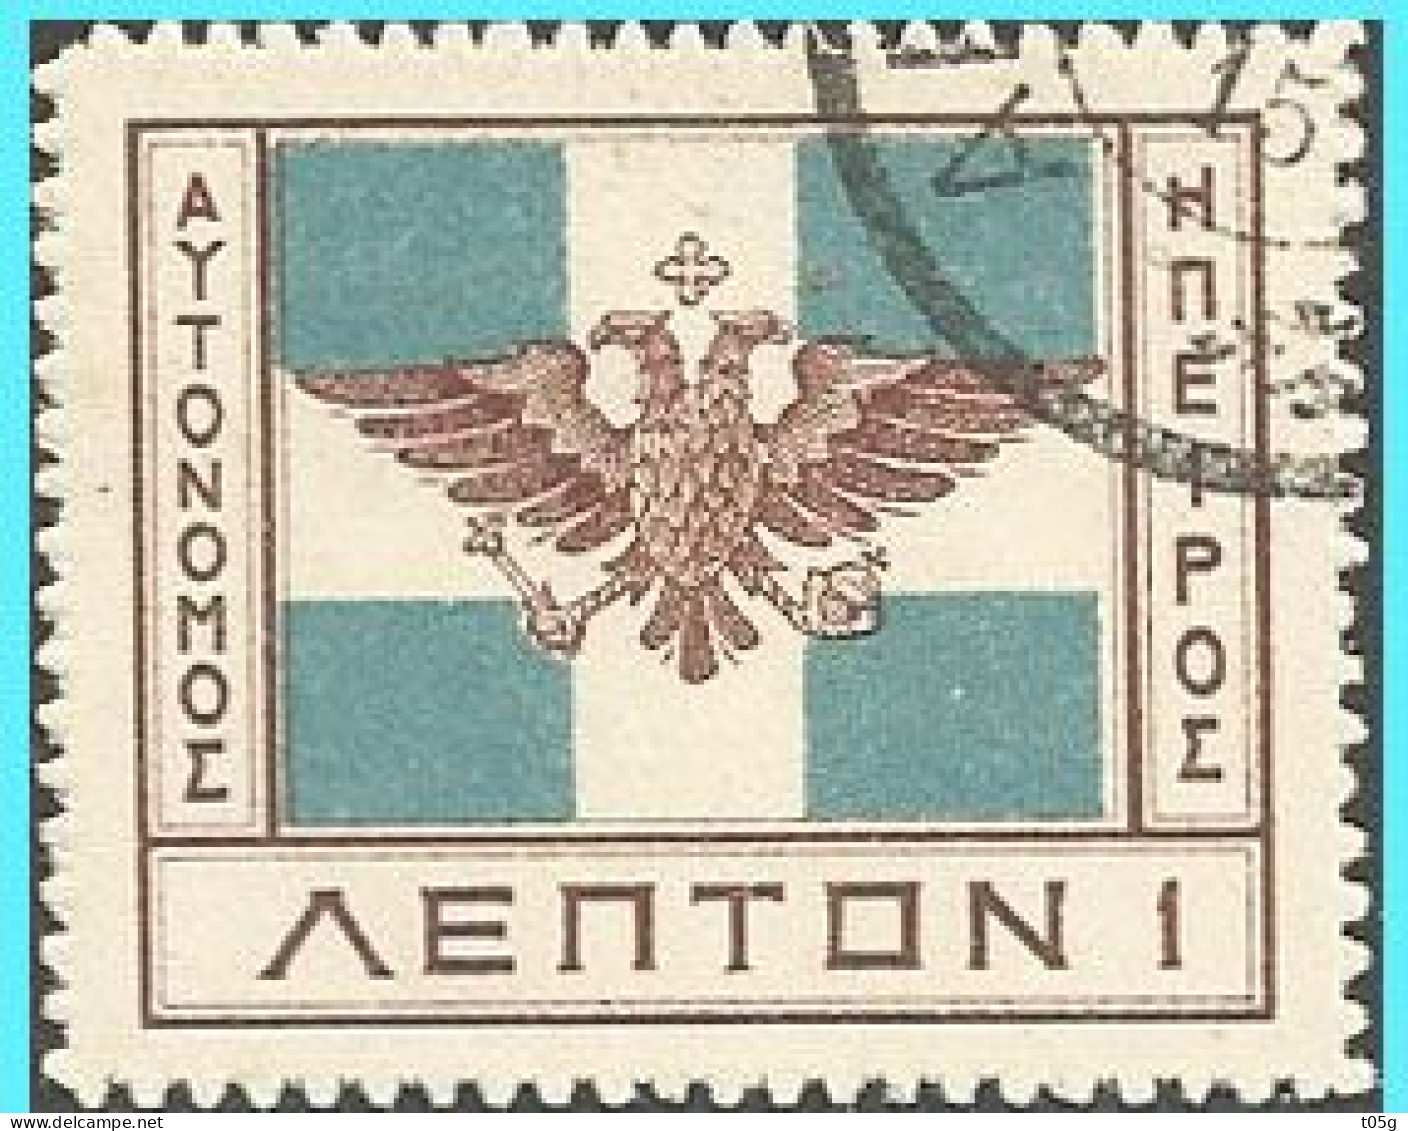 GREECE- GRECE- HELLAS -ALBANIA-EPIRUS- 1914: Flag 1 ΛΕΠΤΟΝ Flag From. Set Used - Epirus & Albania